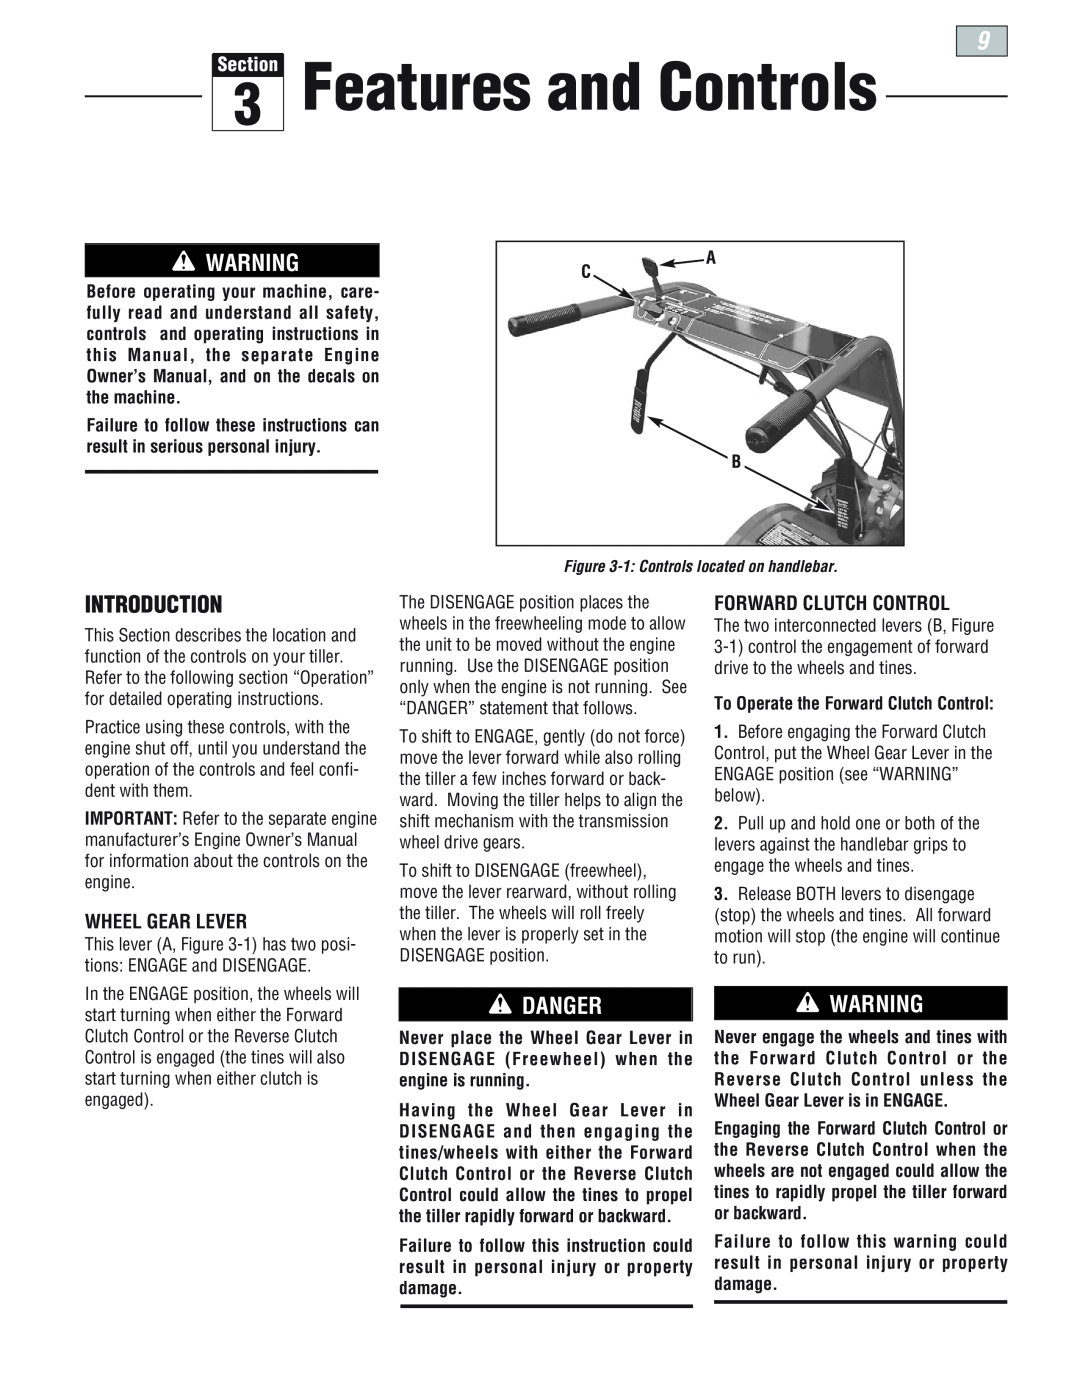 Troy-Bilt 665B Pro-line manual Features and Controls, Danger, Wheel Gear Lever, Forward Clutch Control, A C B, Introduction 